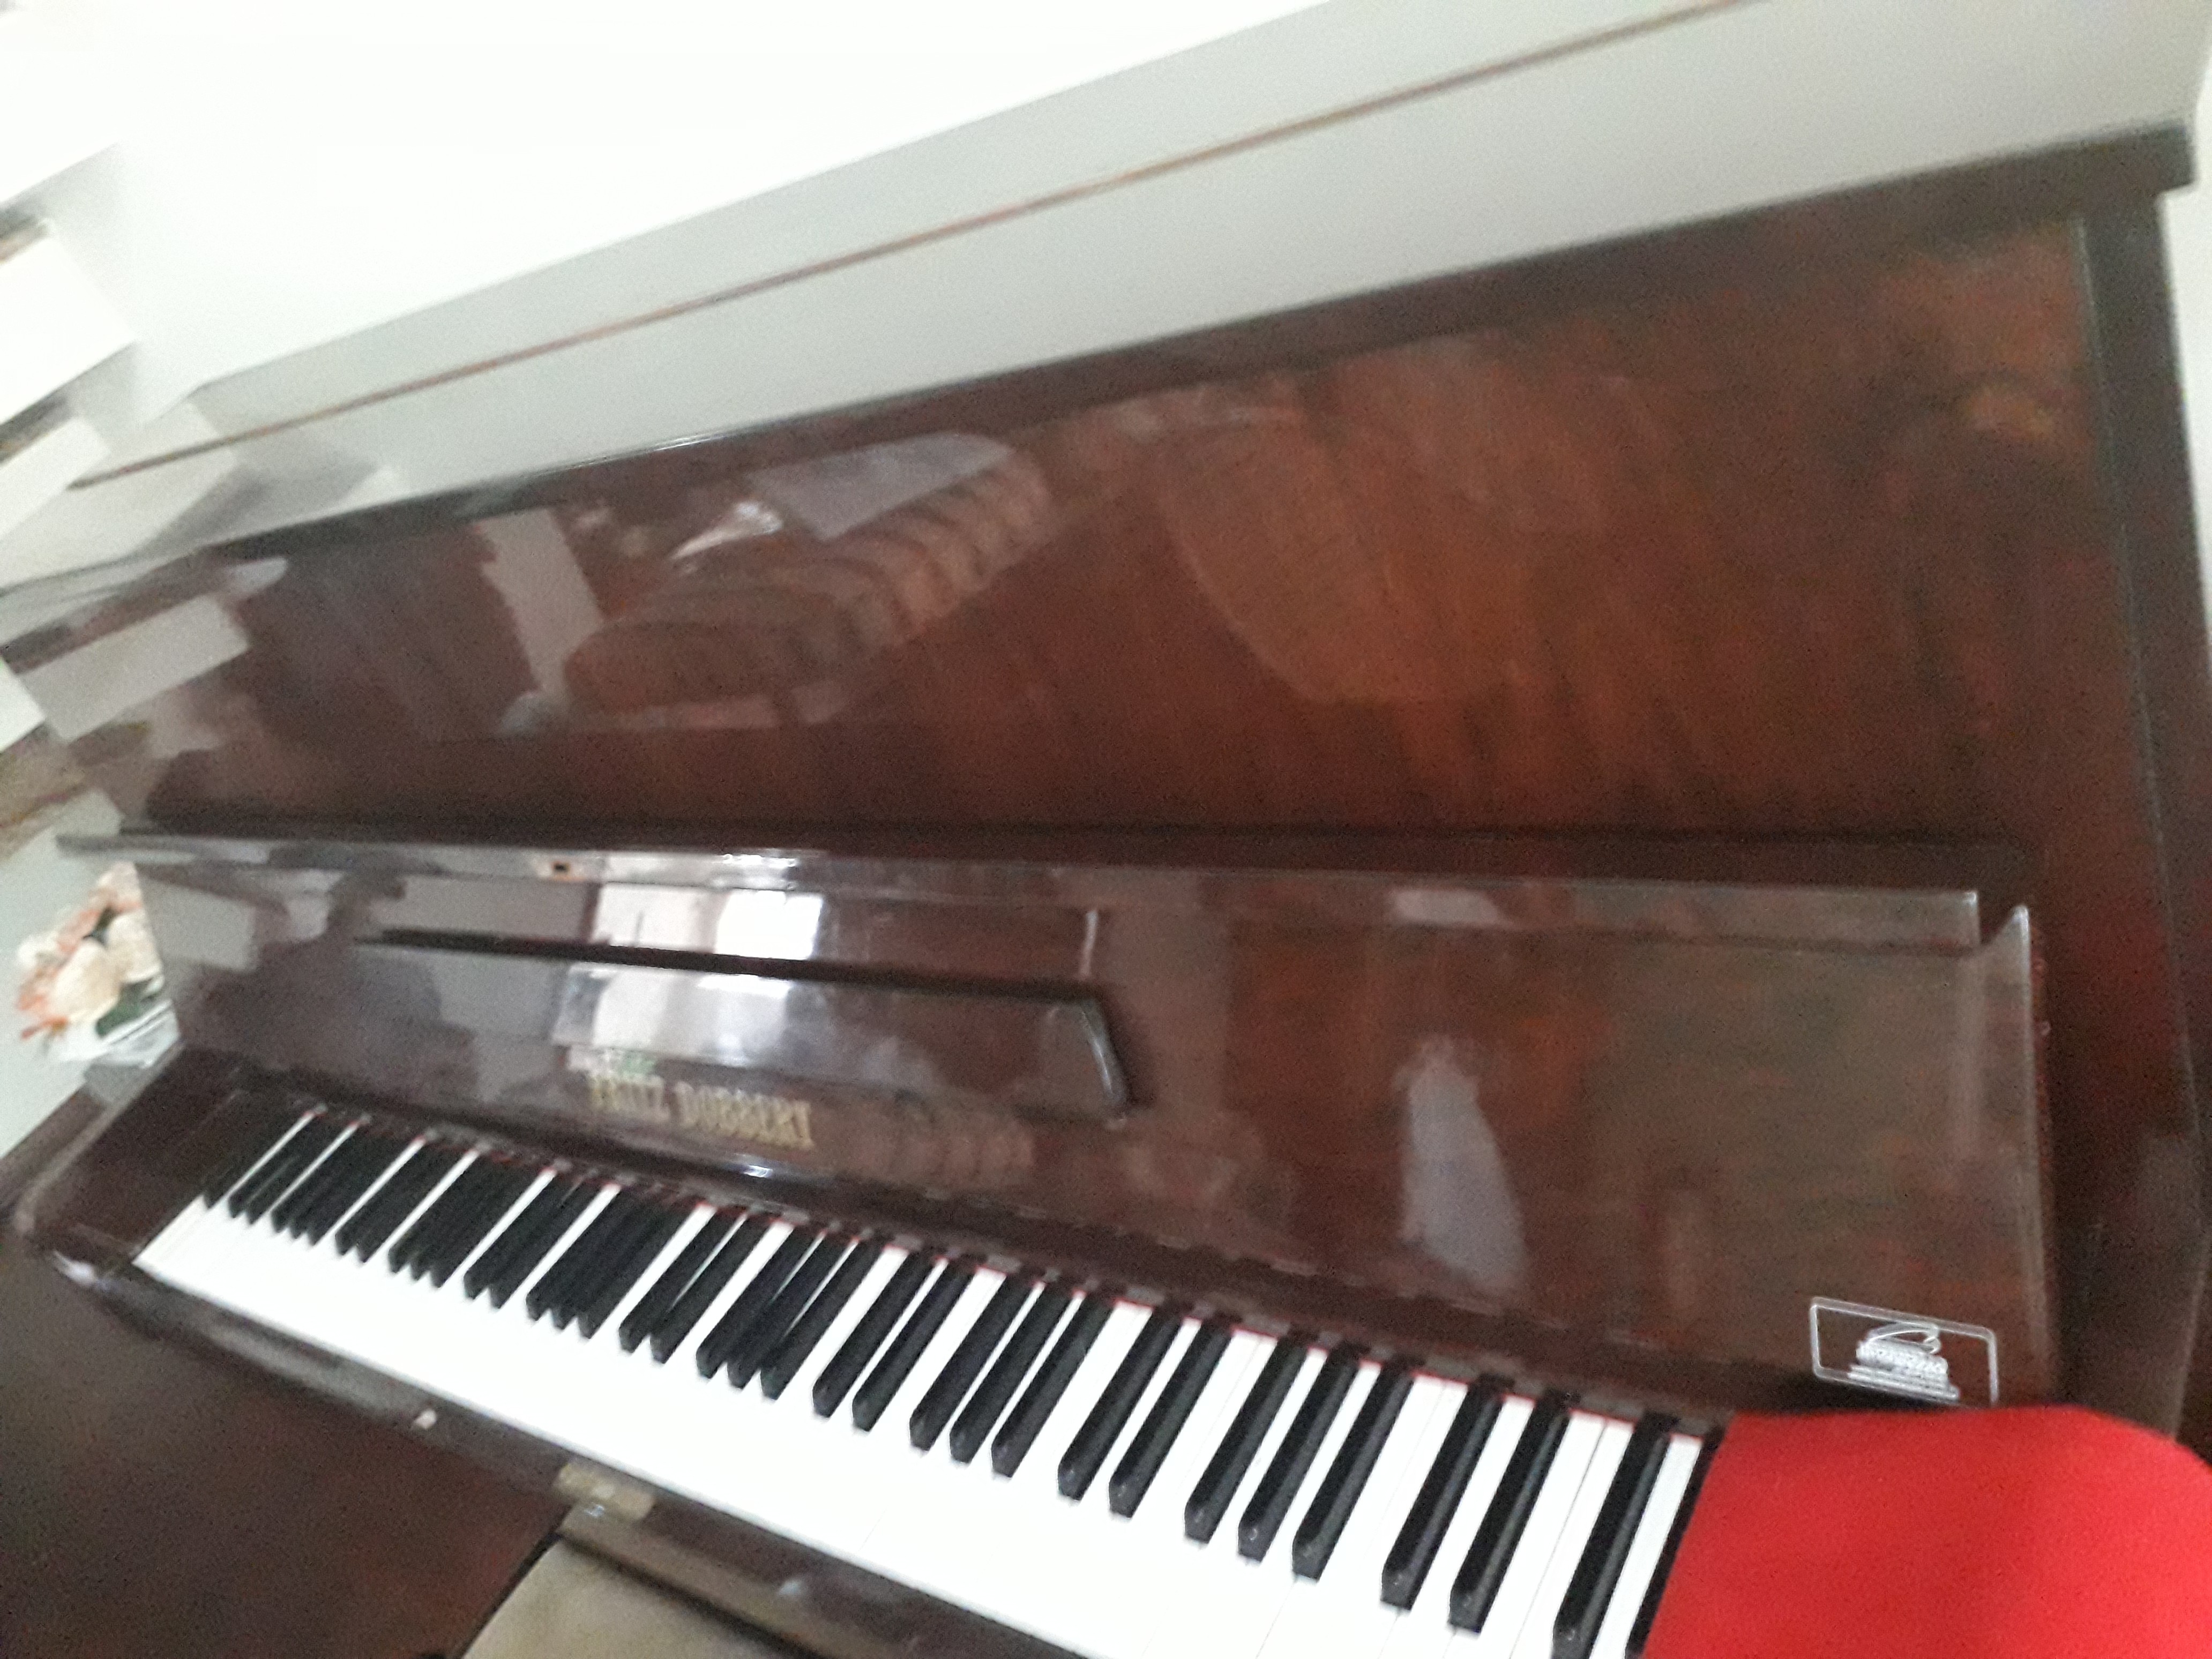 Piano FRITZ DOBBERT VERTICAL 114 imbuia